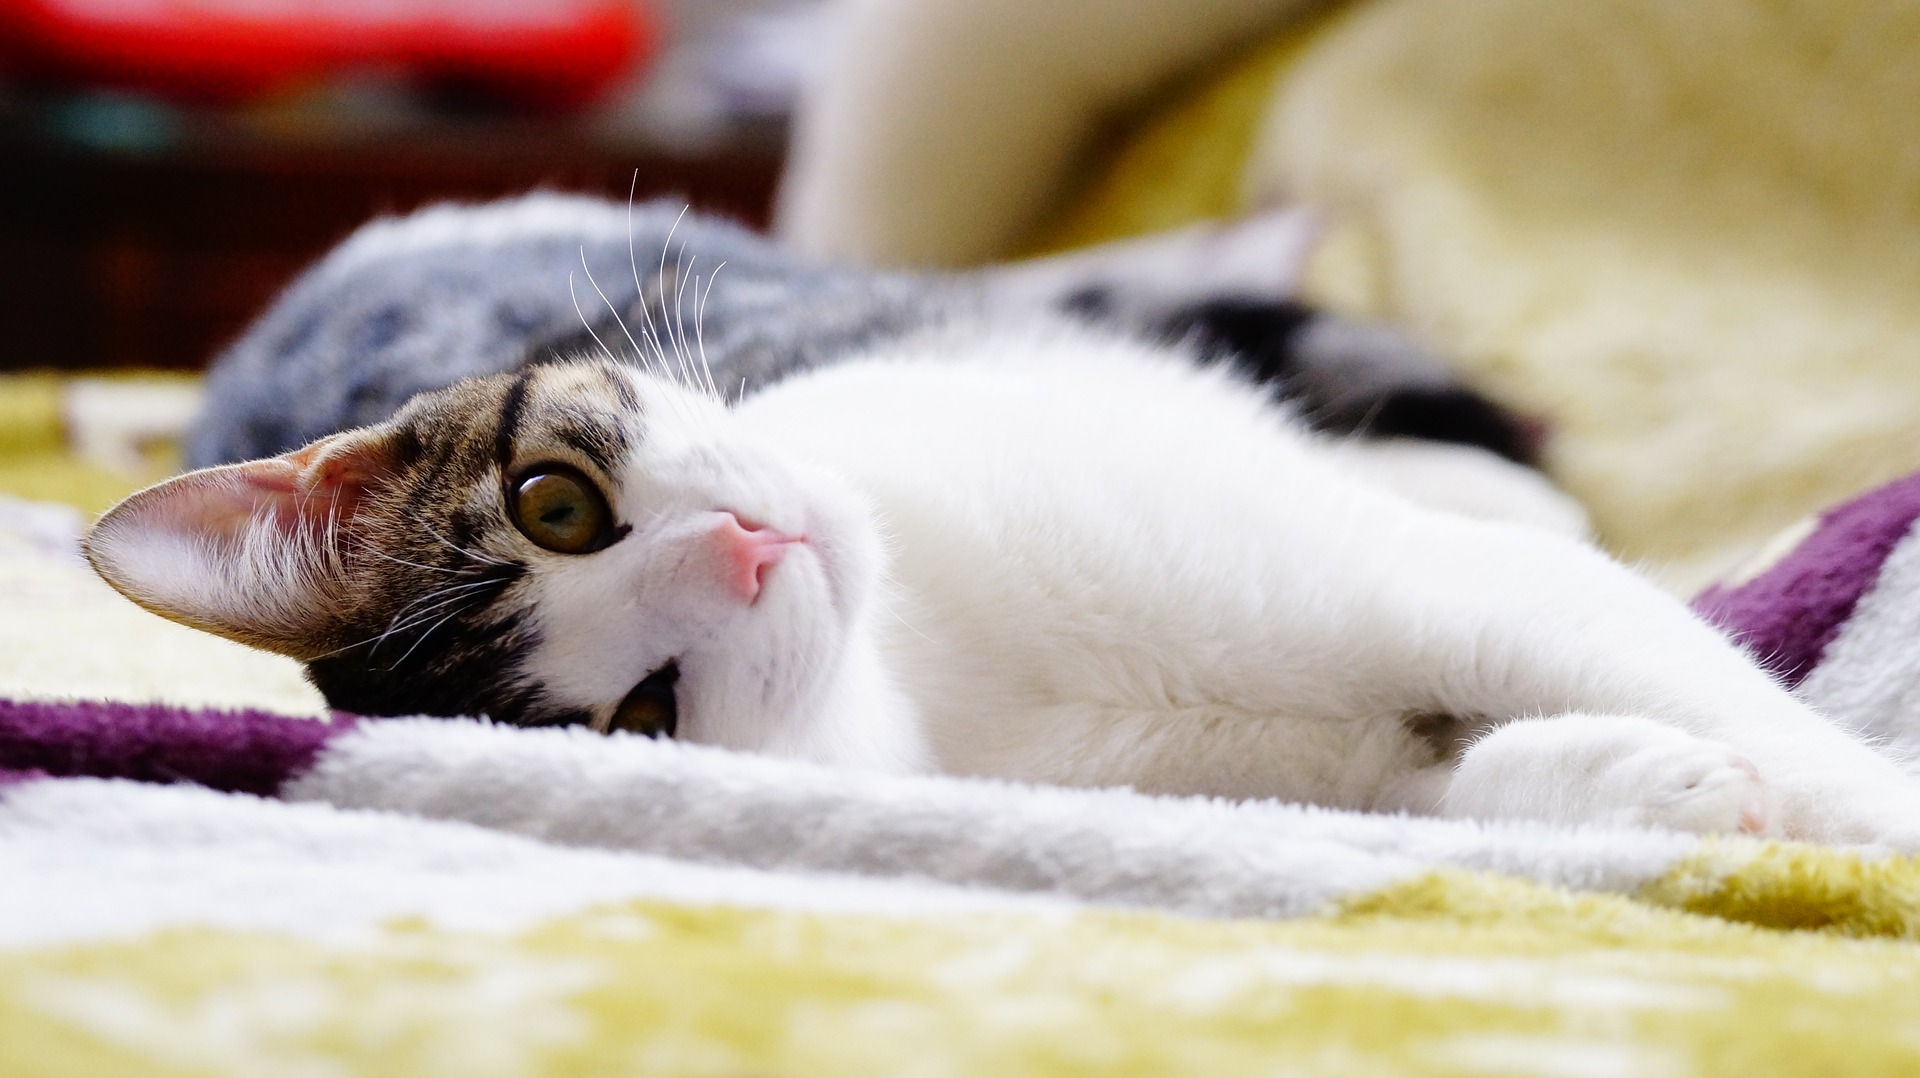 Wallpaper Cat, kitten in bed